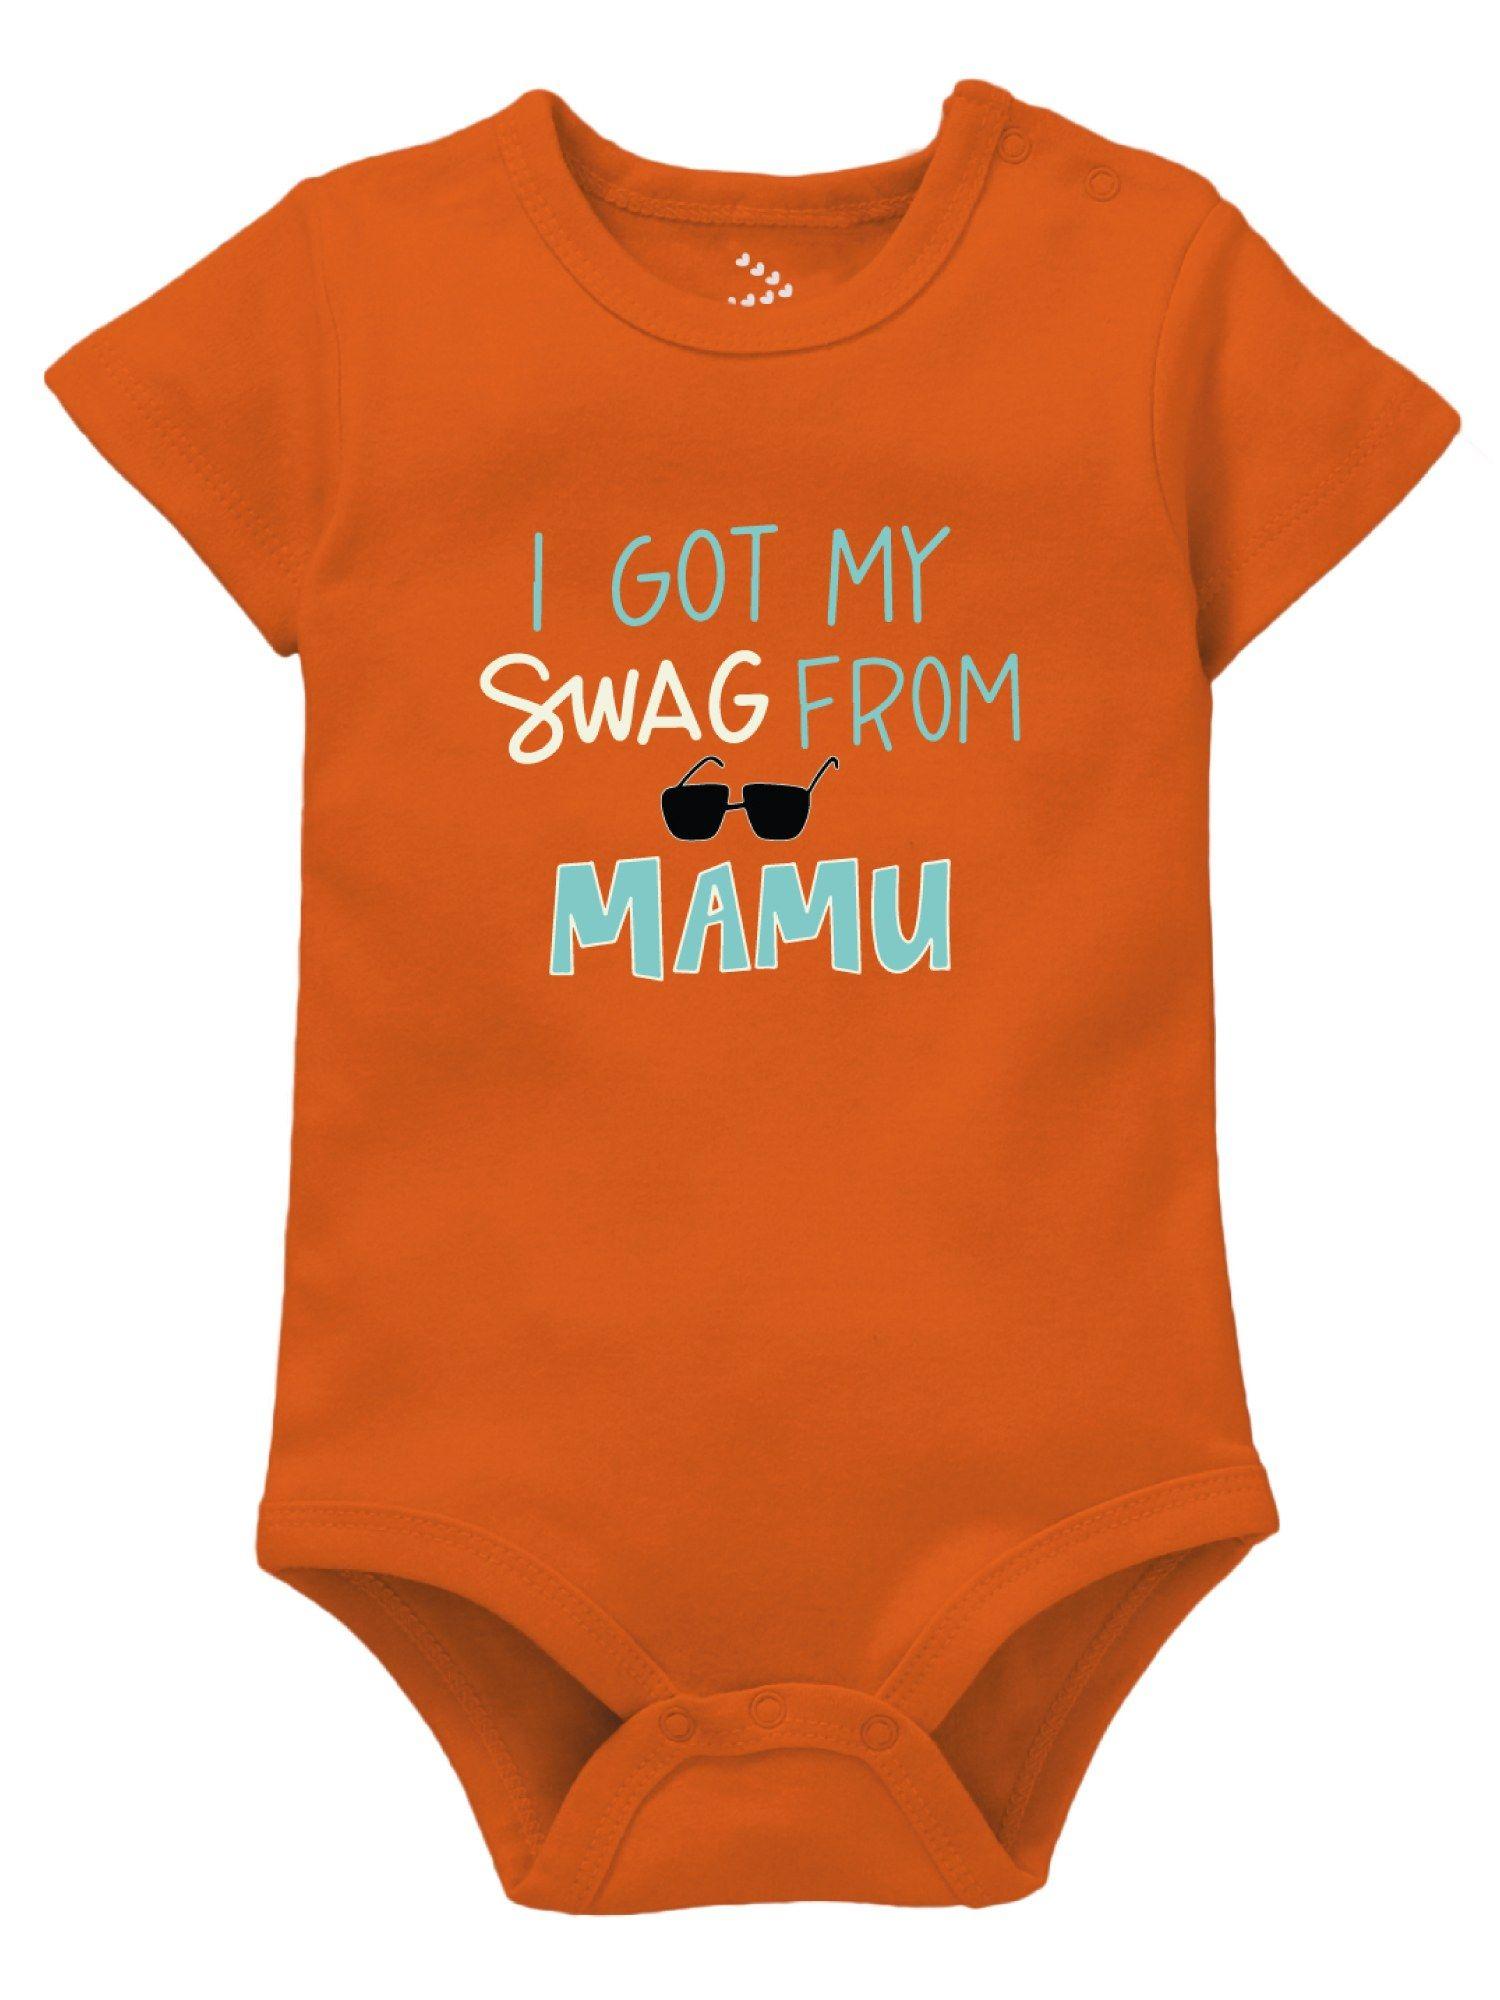 swaag from mamu orange baby bodysuit onesie orange